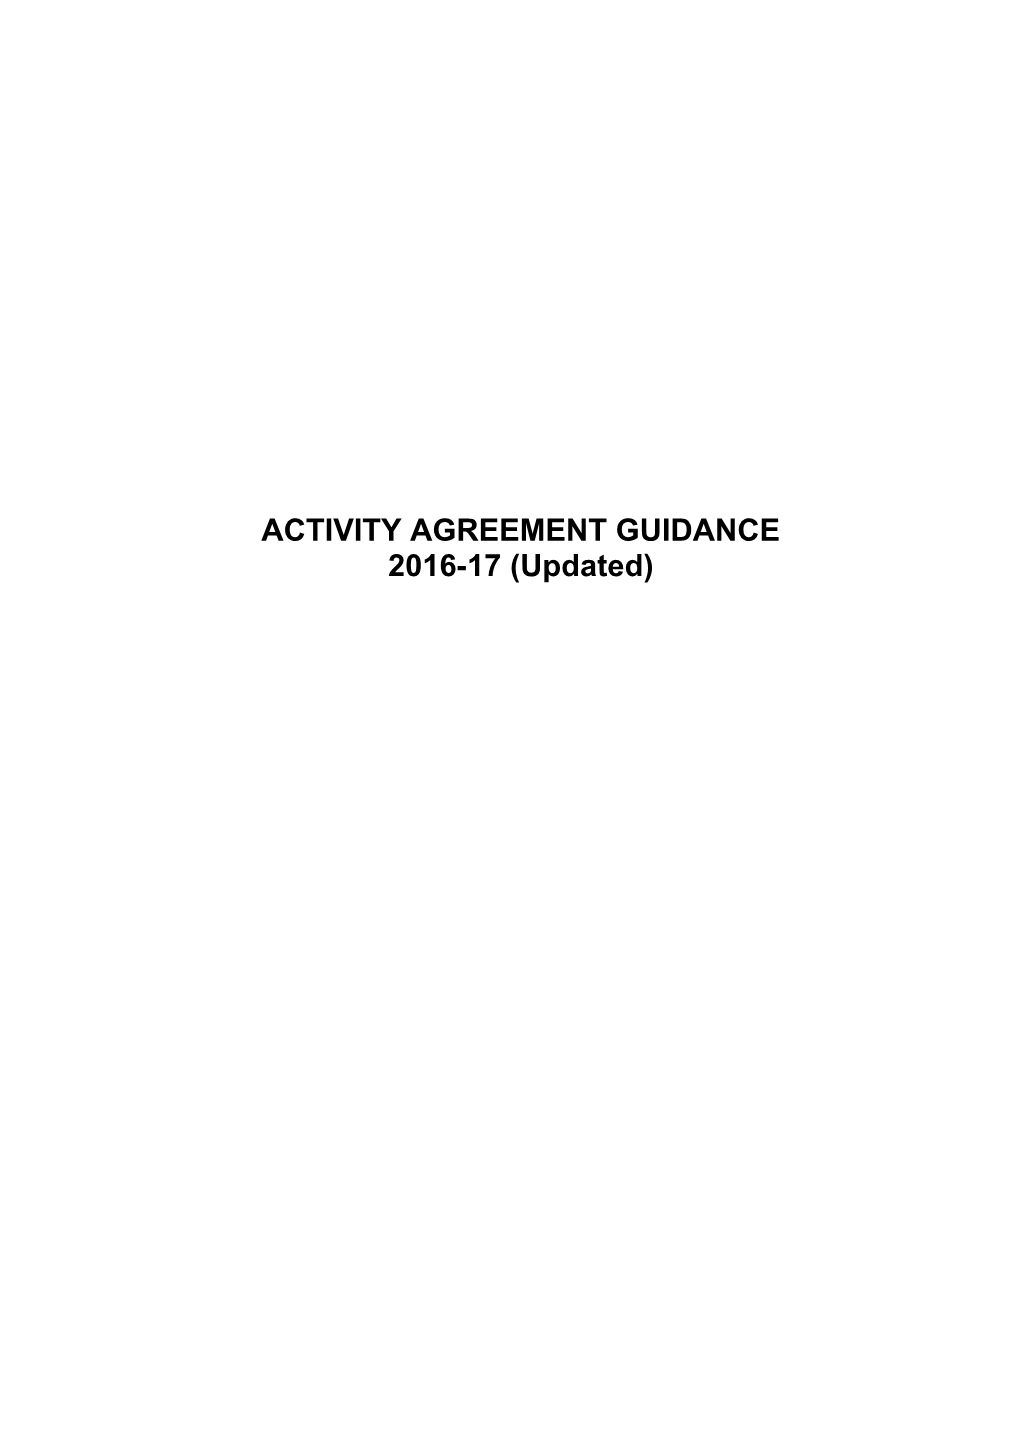 Activity Agreement Guidance